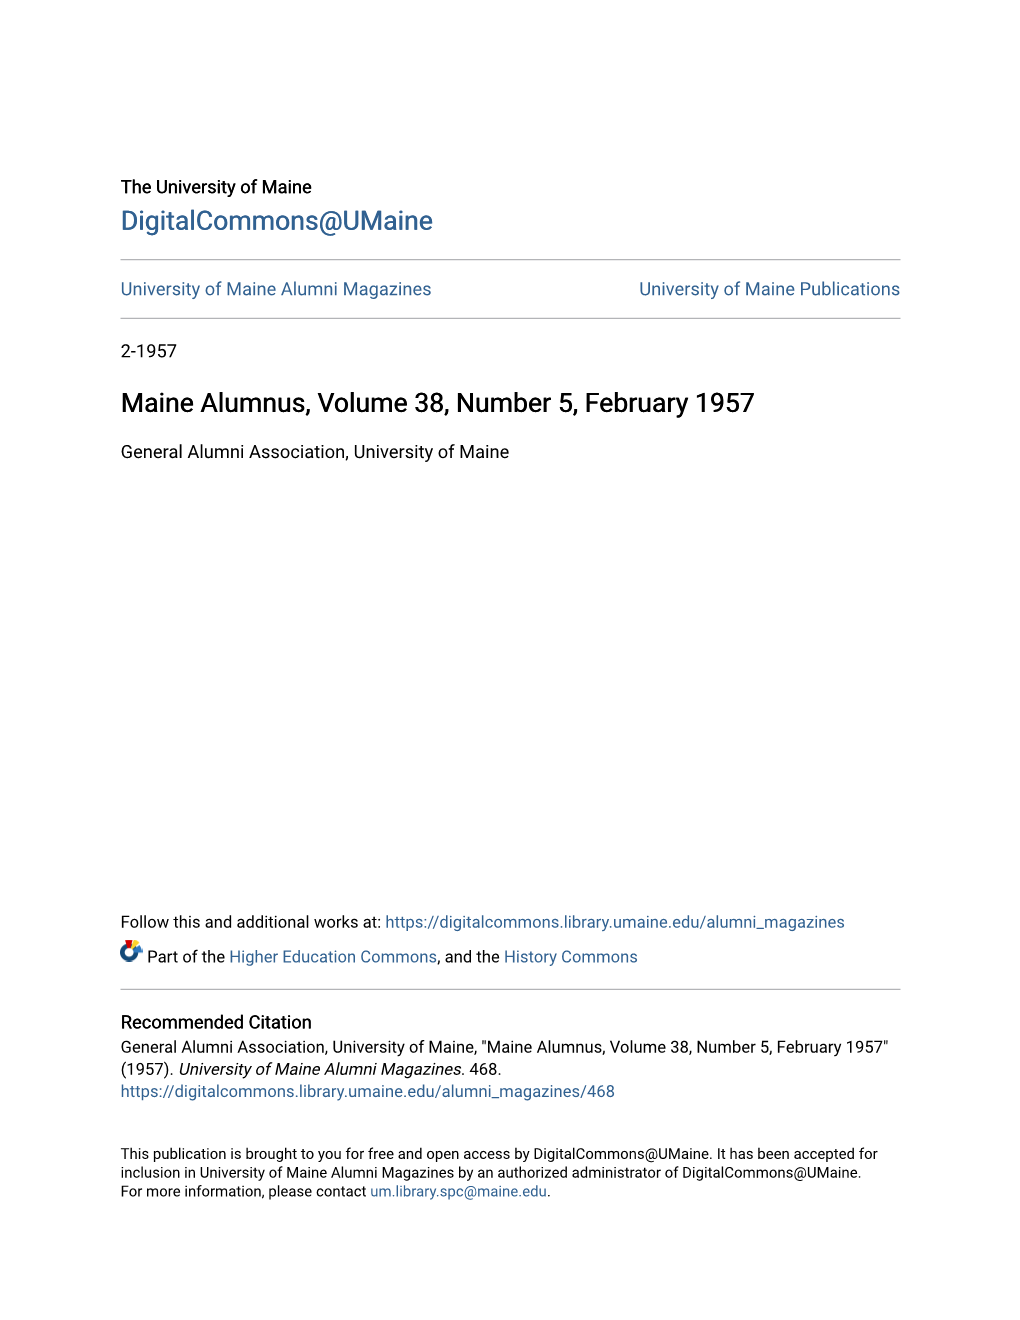 Maine Alumnus, Volume 38, Number 5, February 1957